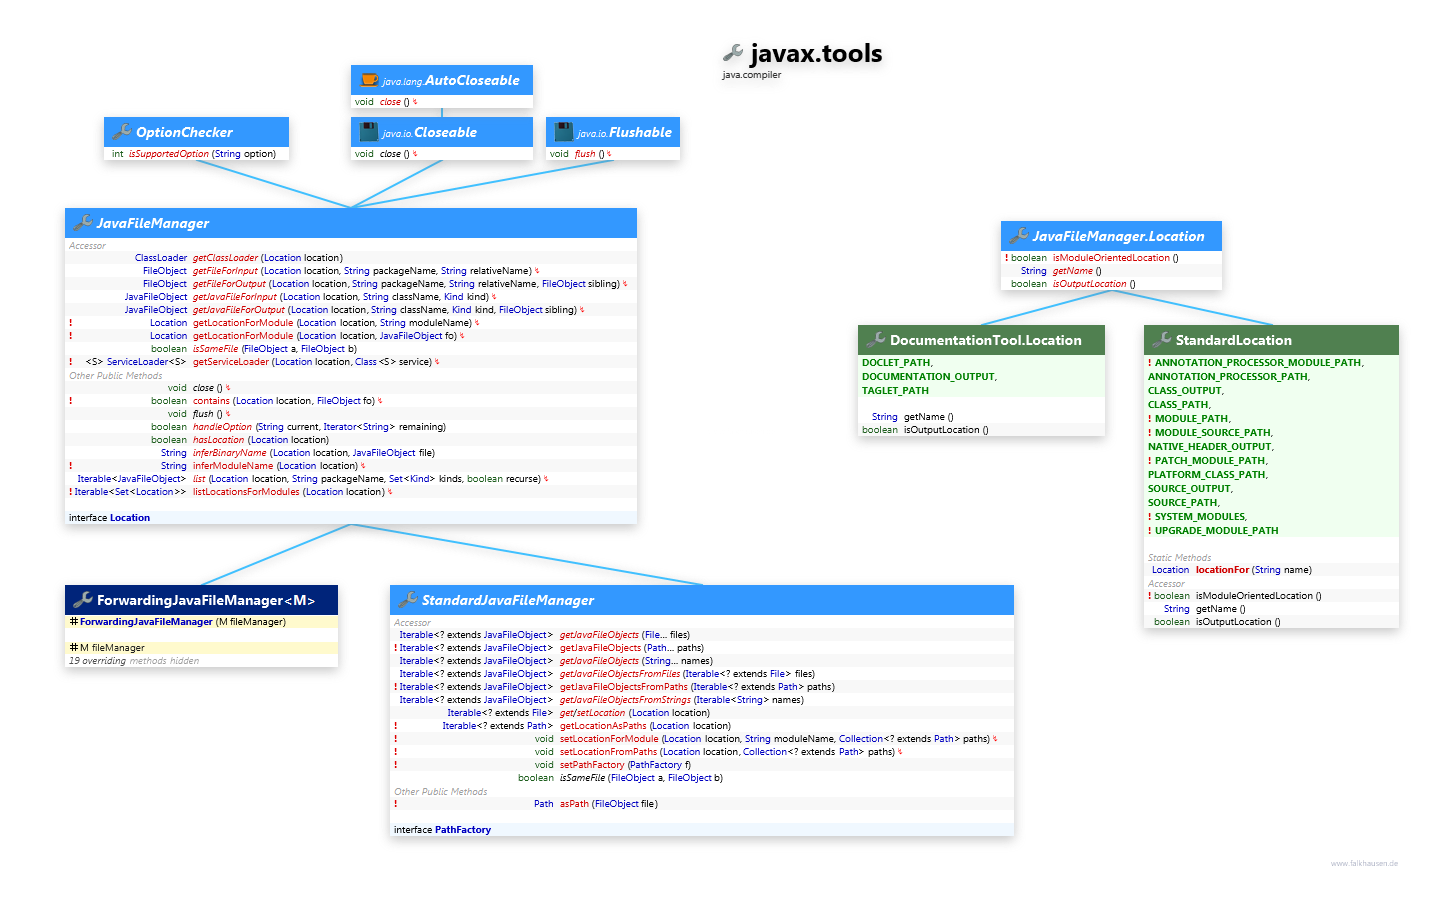 javax.tools JavaFileManager class diagram and api documentation for Java 10